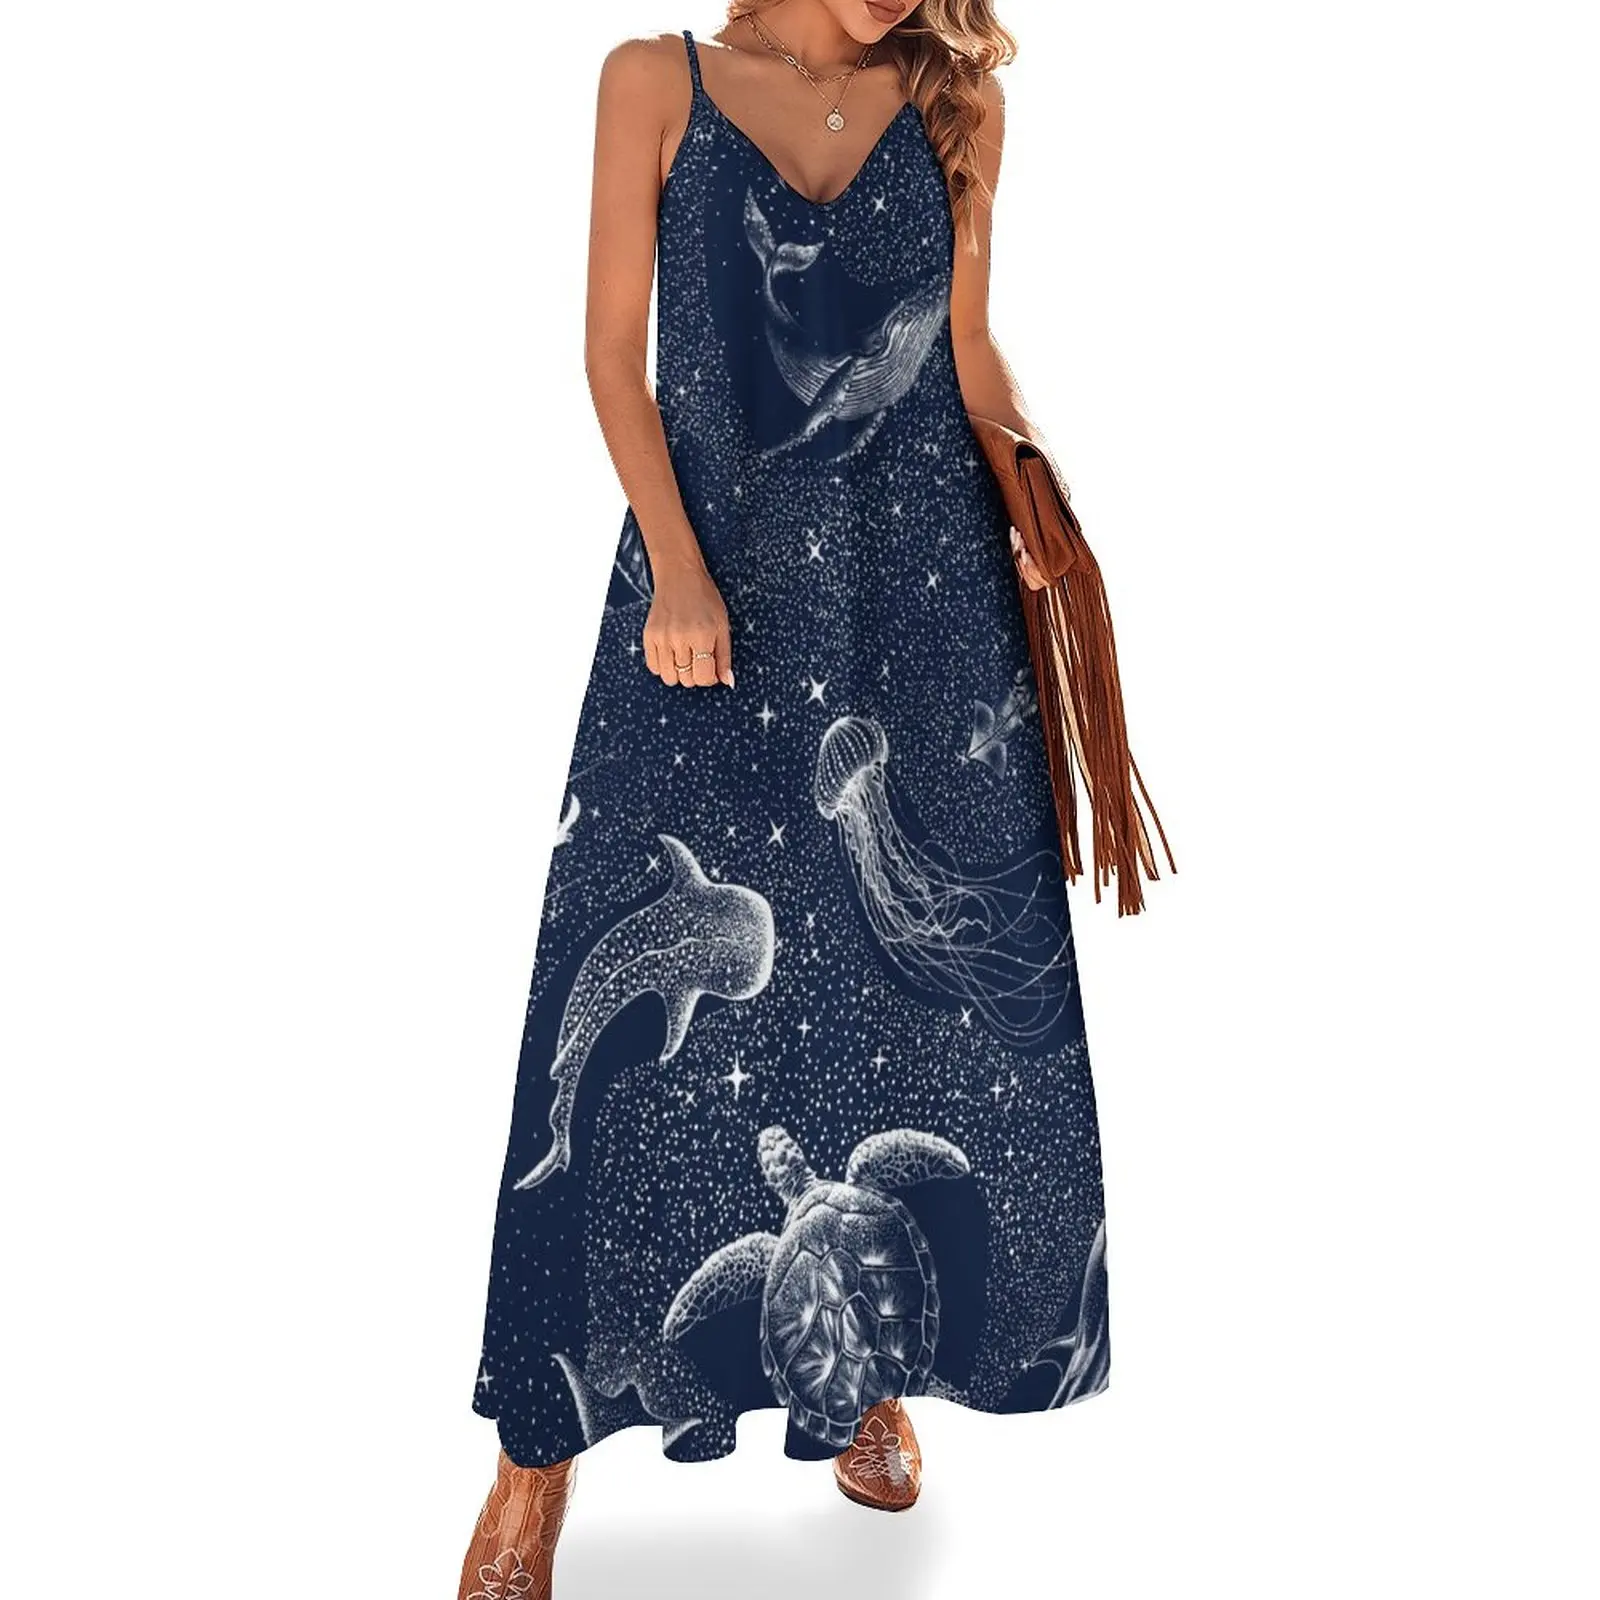 

Cosmic Ocean Sleeveless Dress women's dresses luxury luxury dress evening dresses ladies